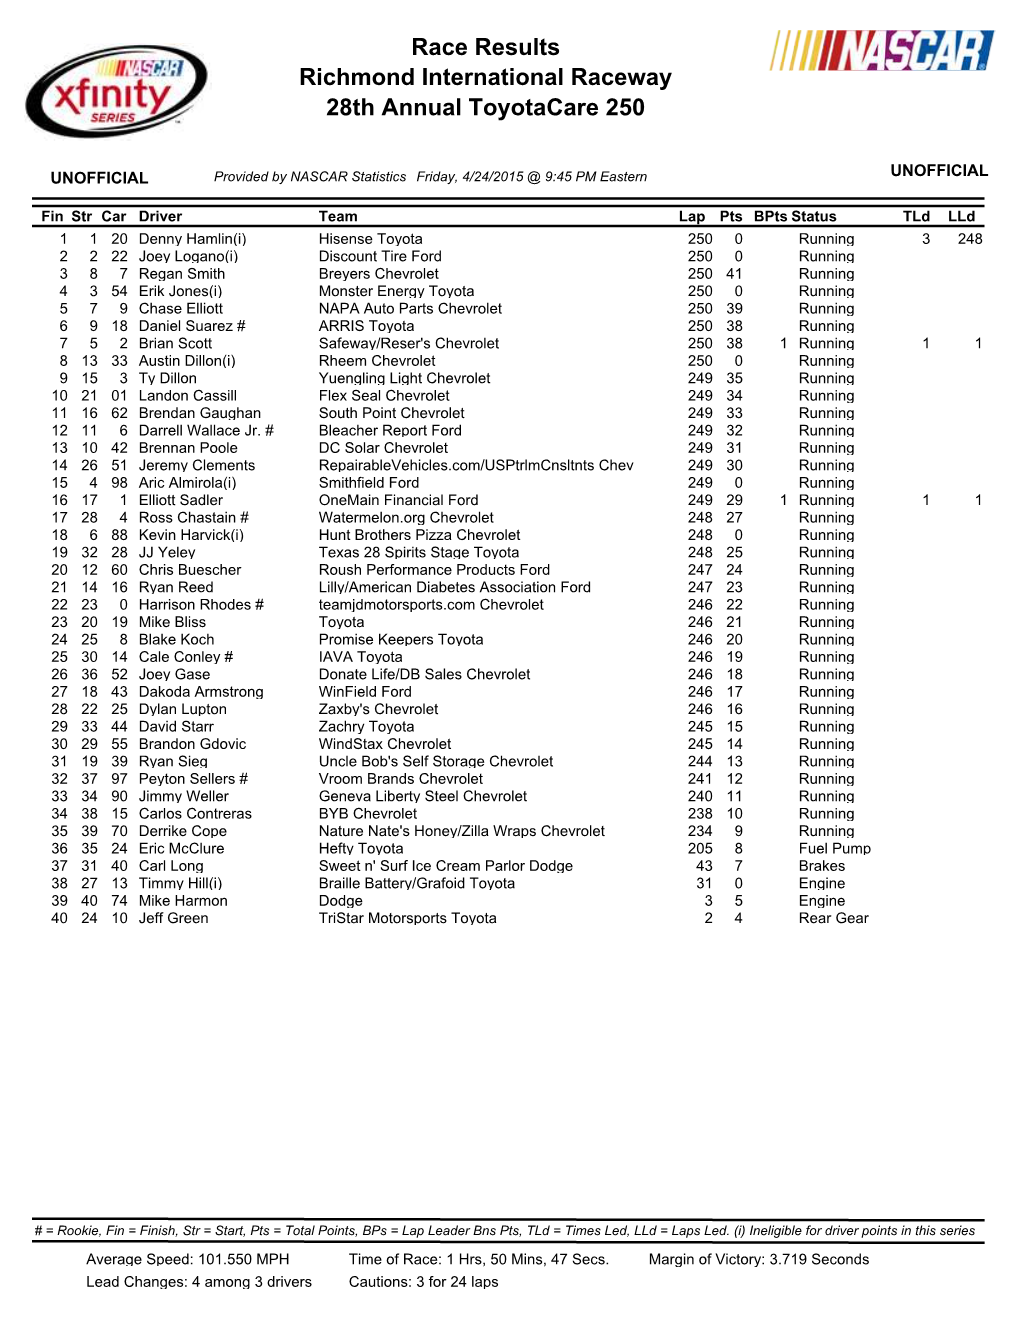 XFINITY Series Race Results